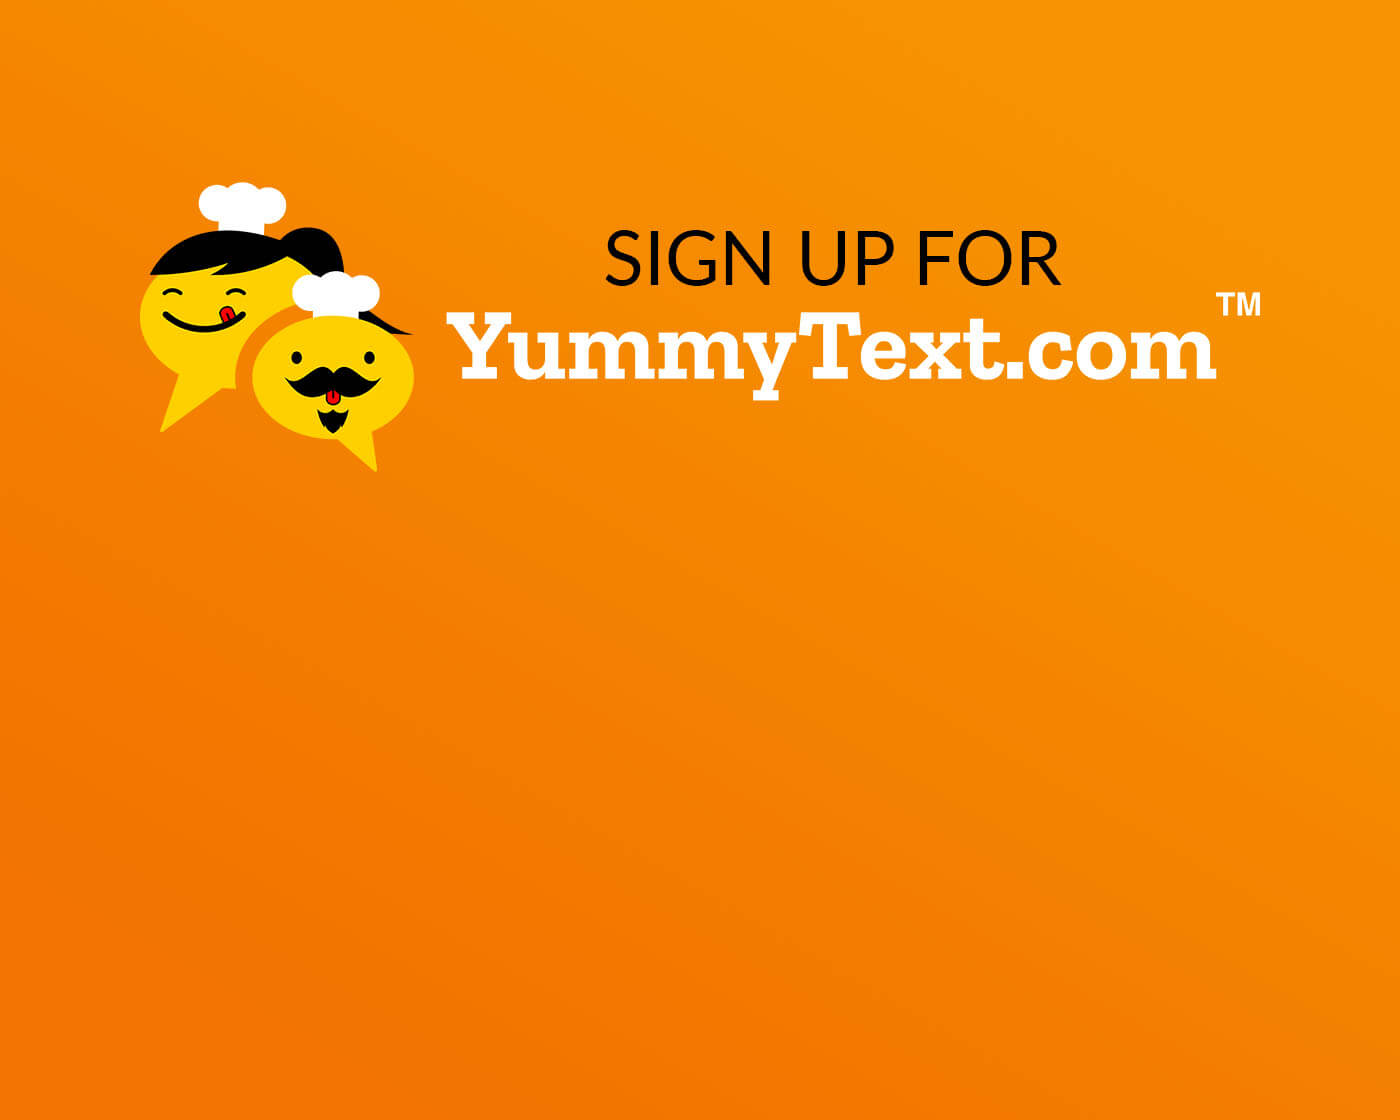 Announcing YummyText.com!